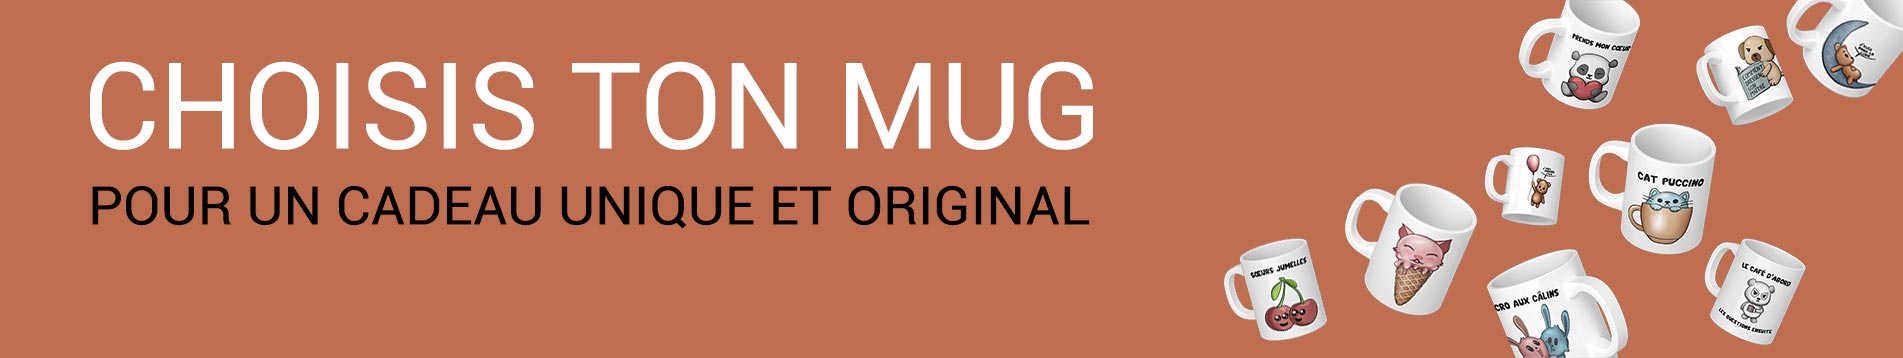 Banderole "choisis ton mug original"